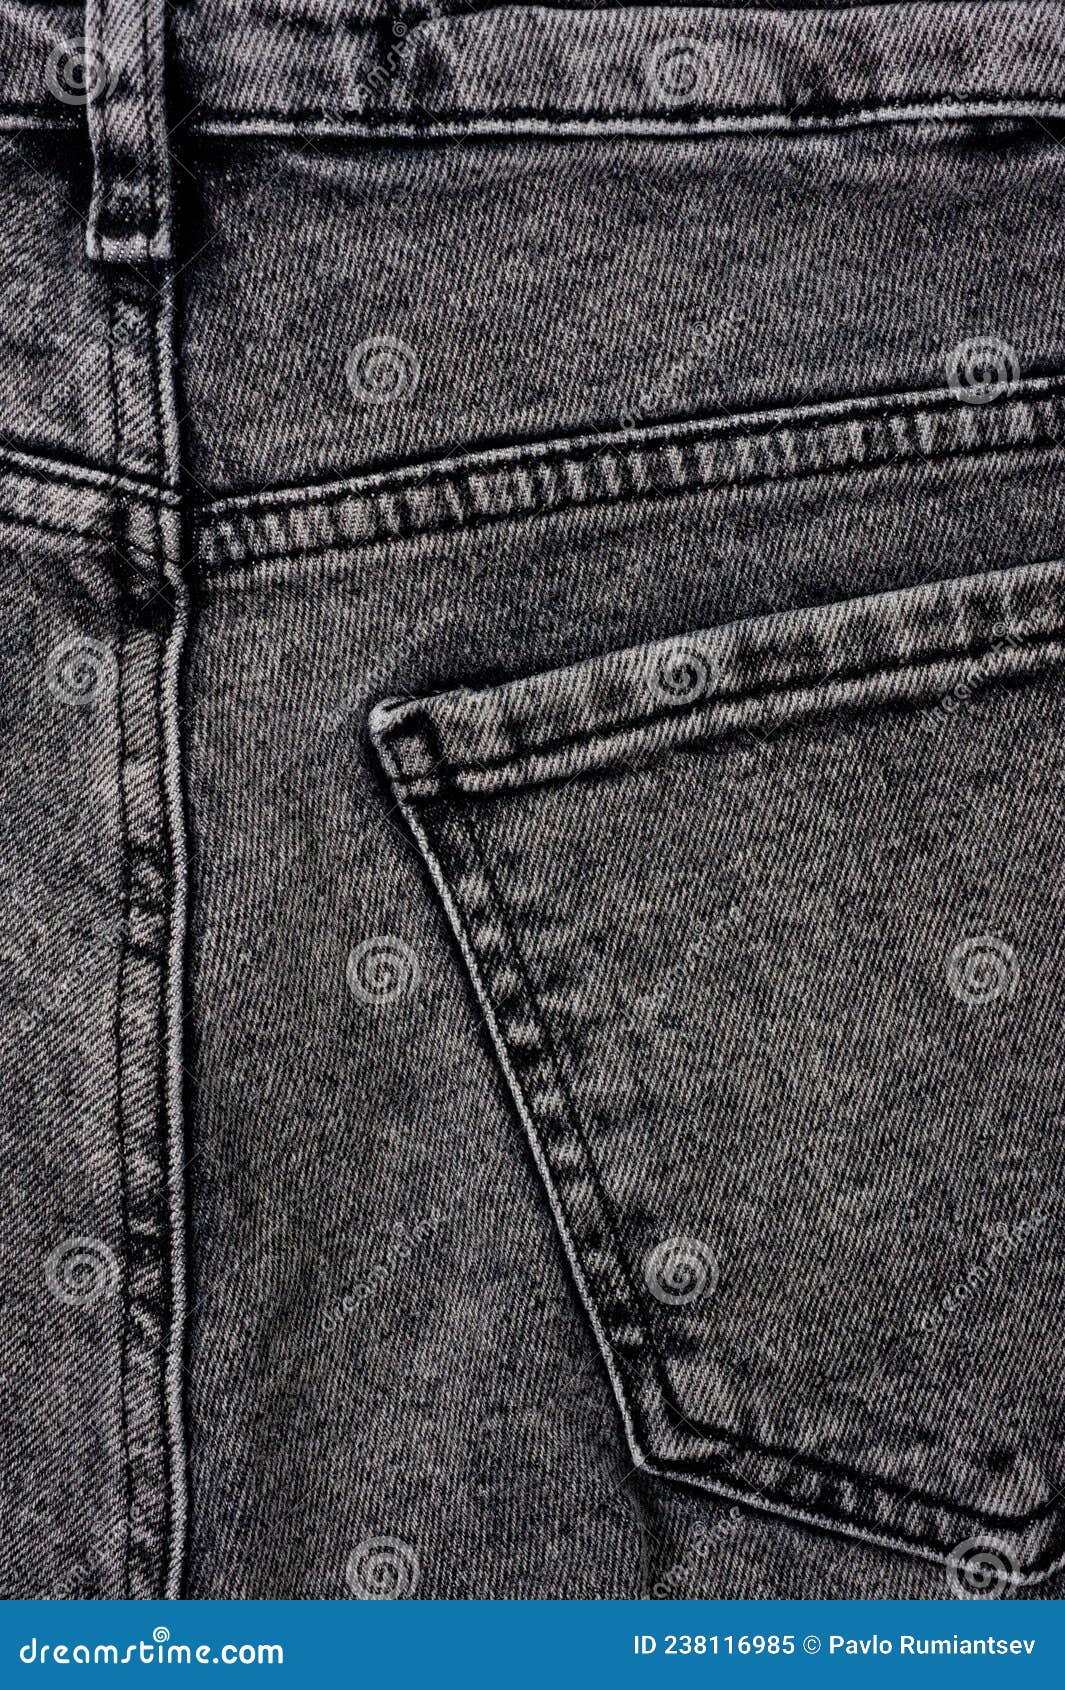 Close-up Shot of Black Denim Texture with Stitching Stock Image - Image ...